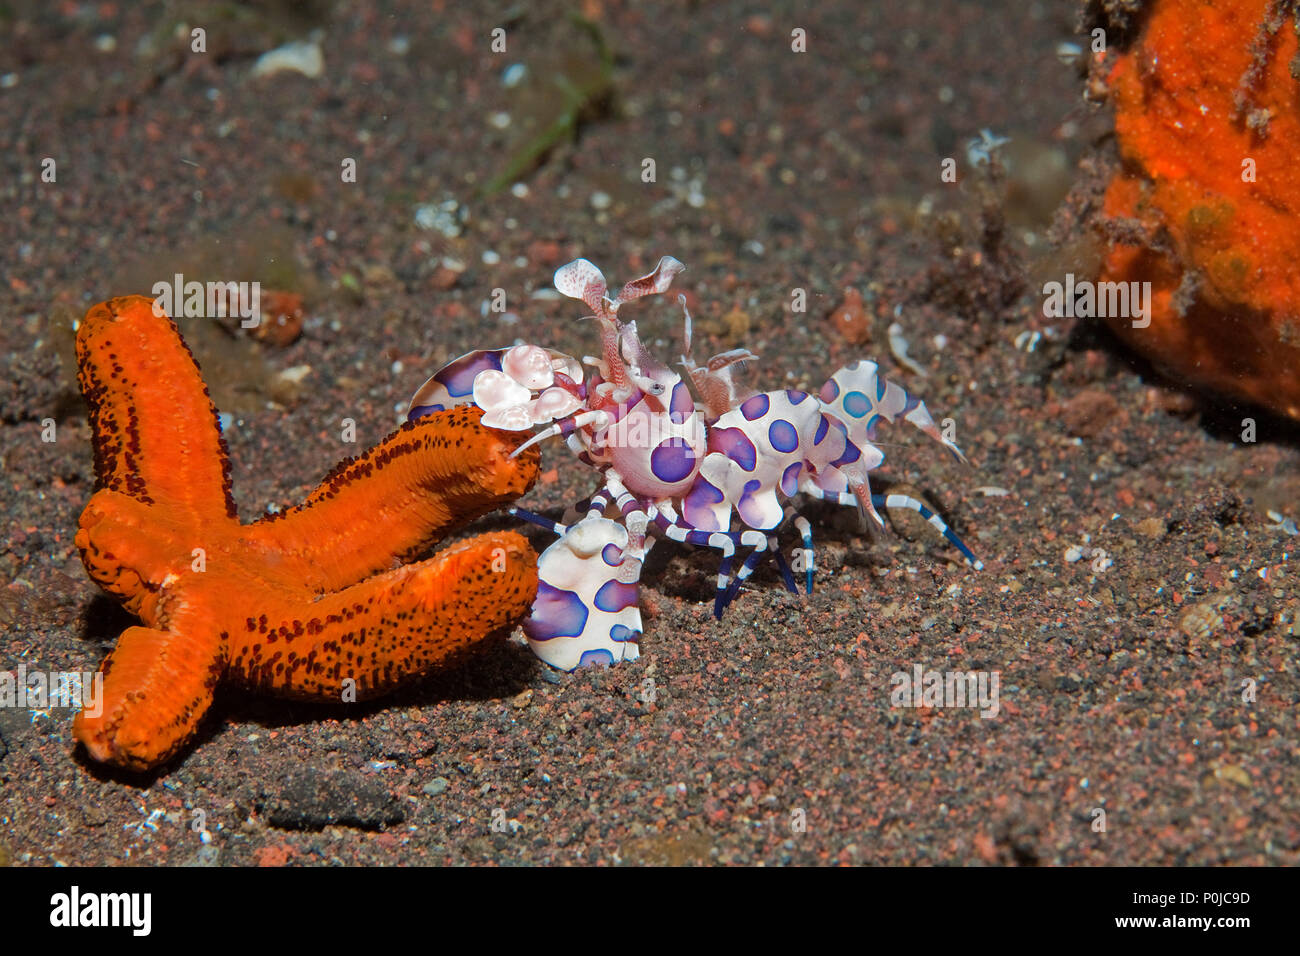 Crevette arlequin (Hymenocera elegans) se nourrissant de starfish, Bali, Indonésie Banque D'Images